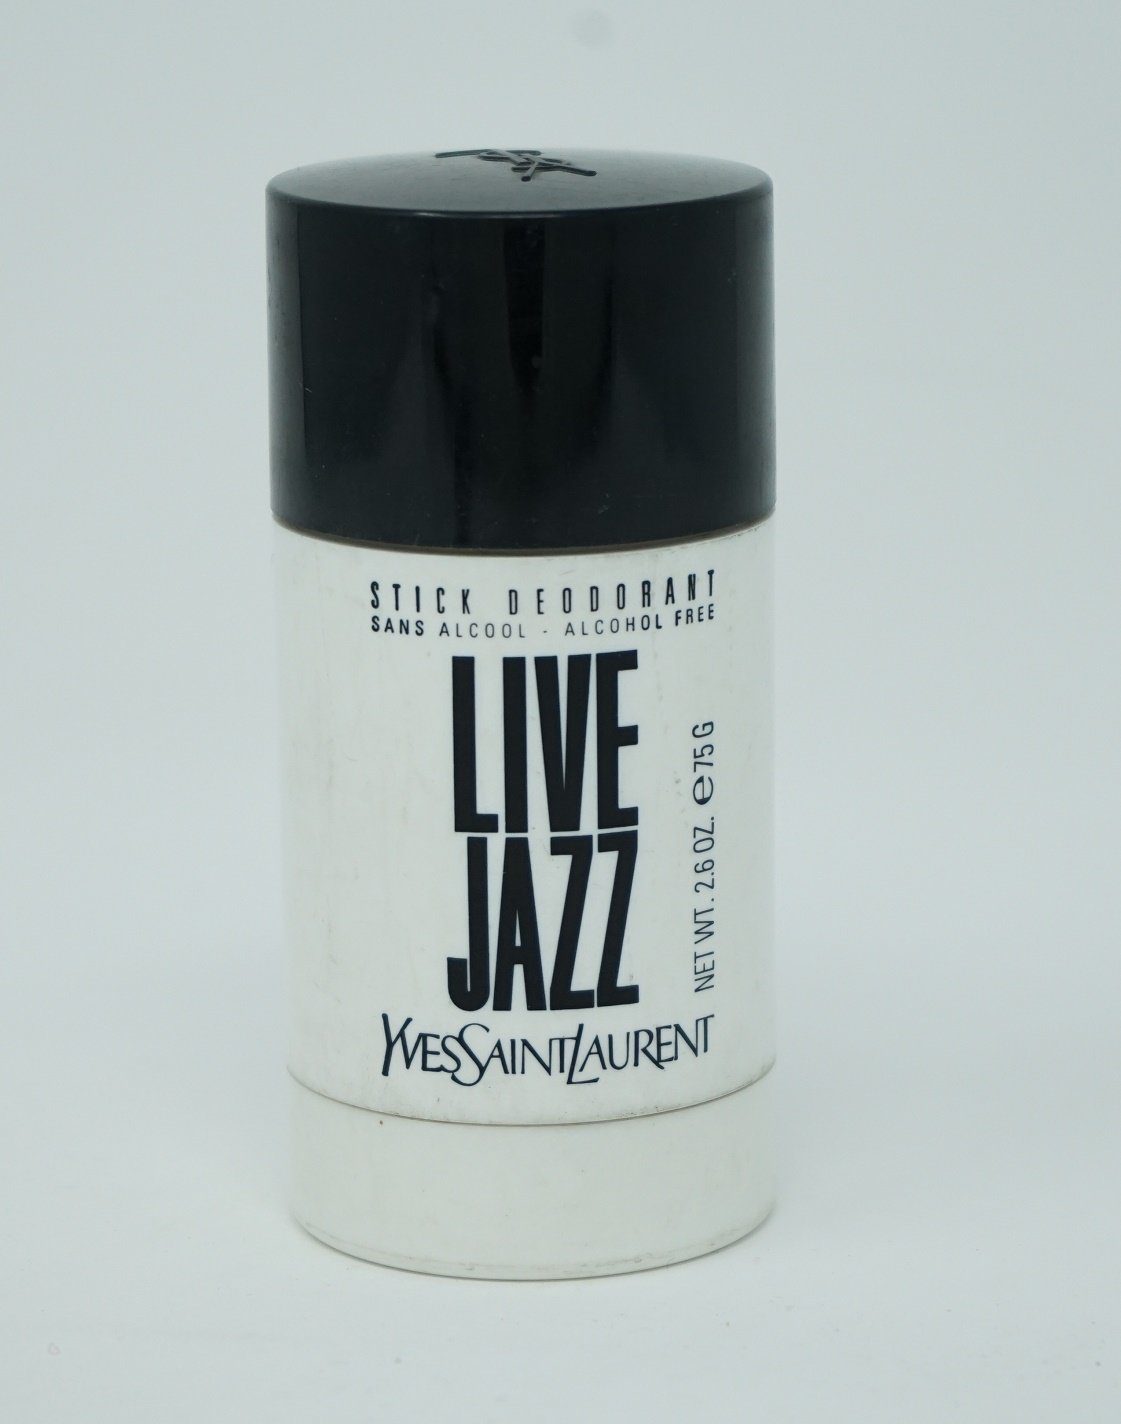 Yves Laurent LAURENT YVES Live Saint Jazz 75g Stick Deodorant SAINT Deo-Stift